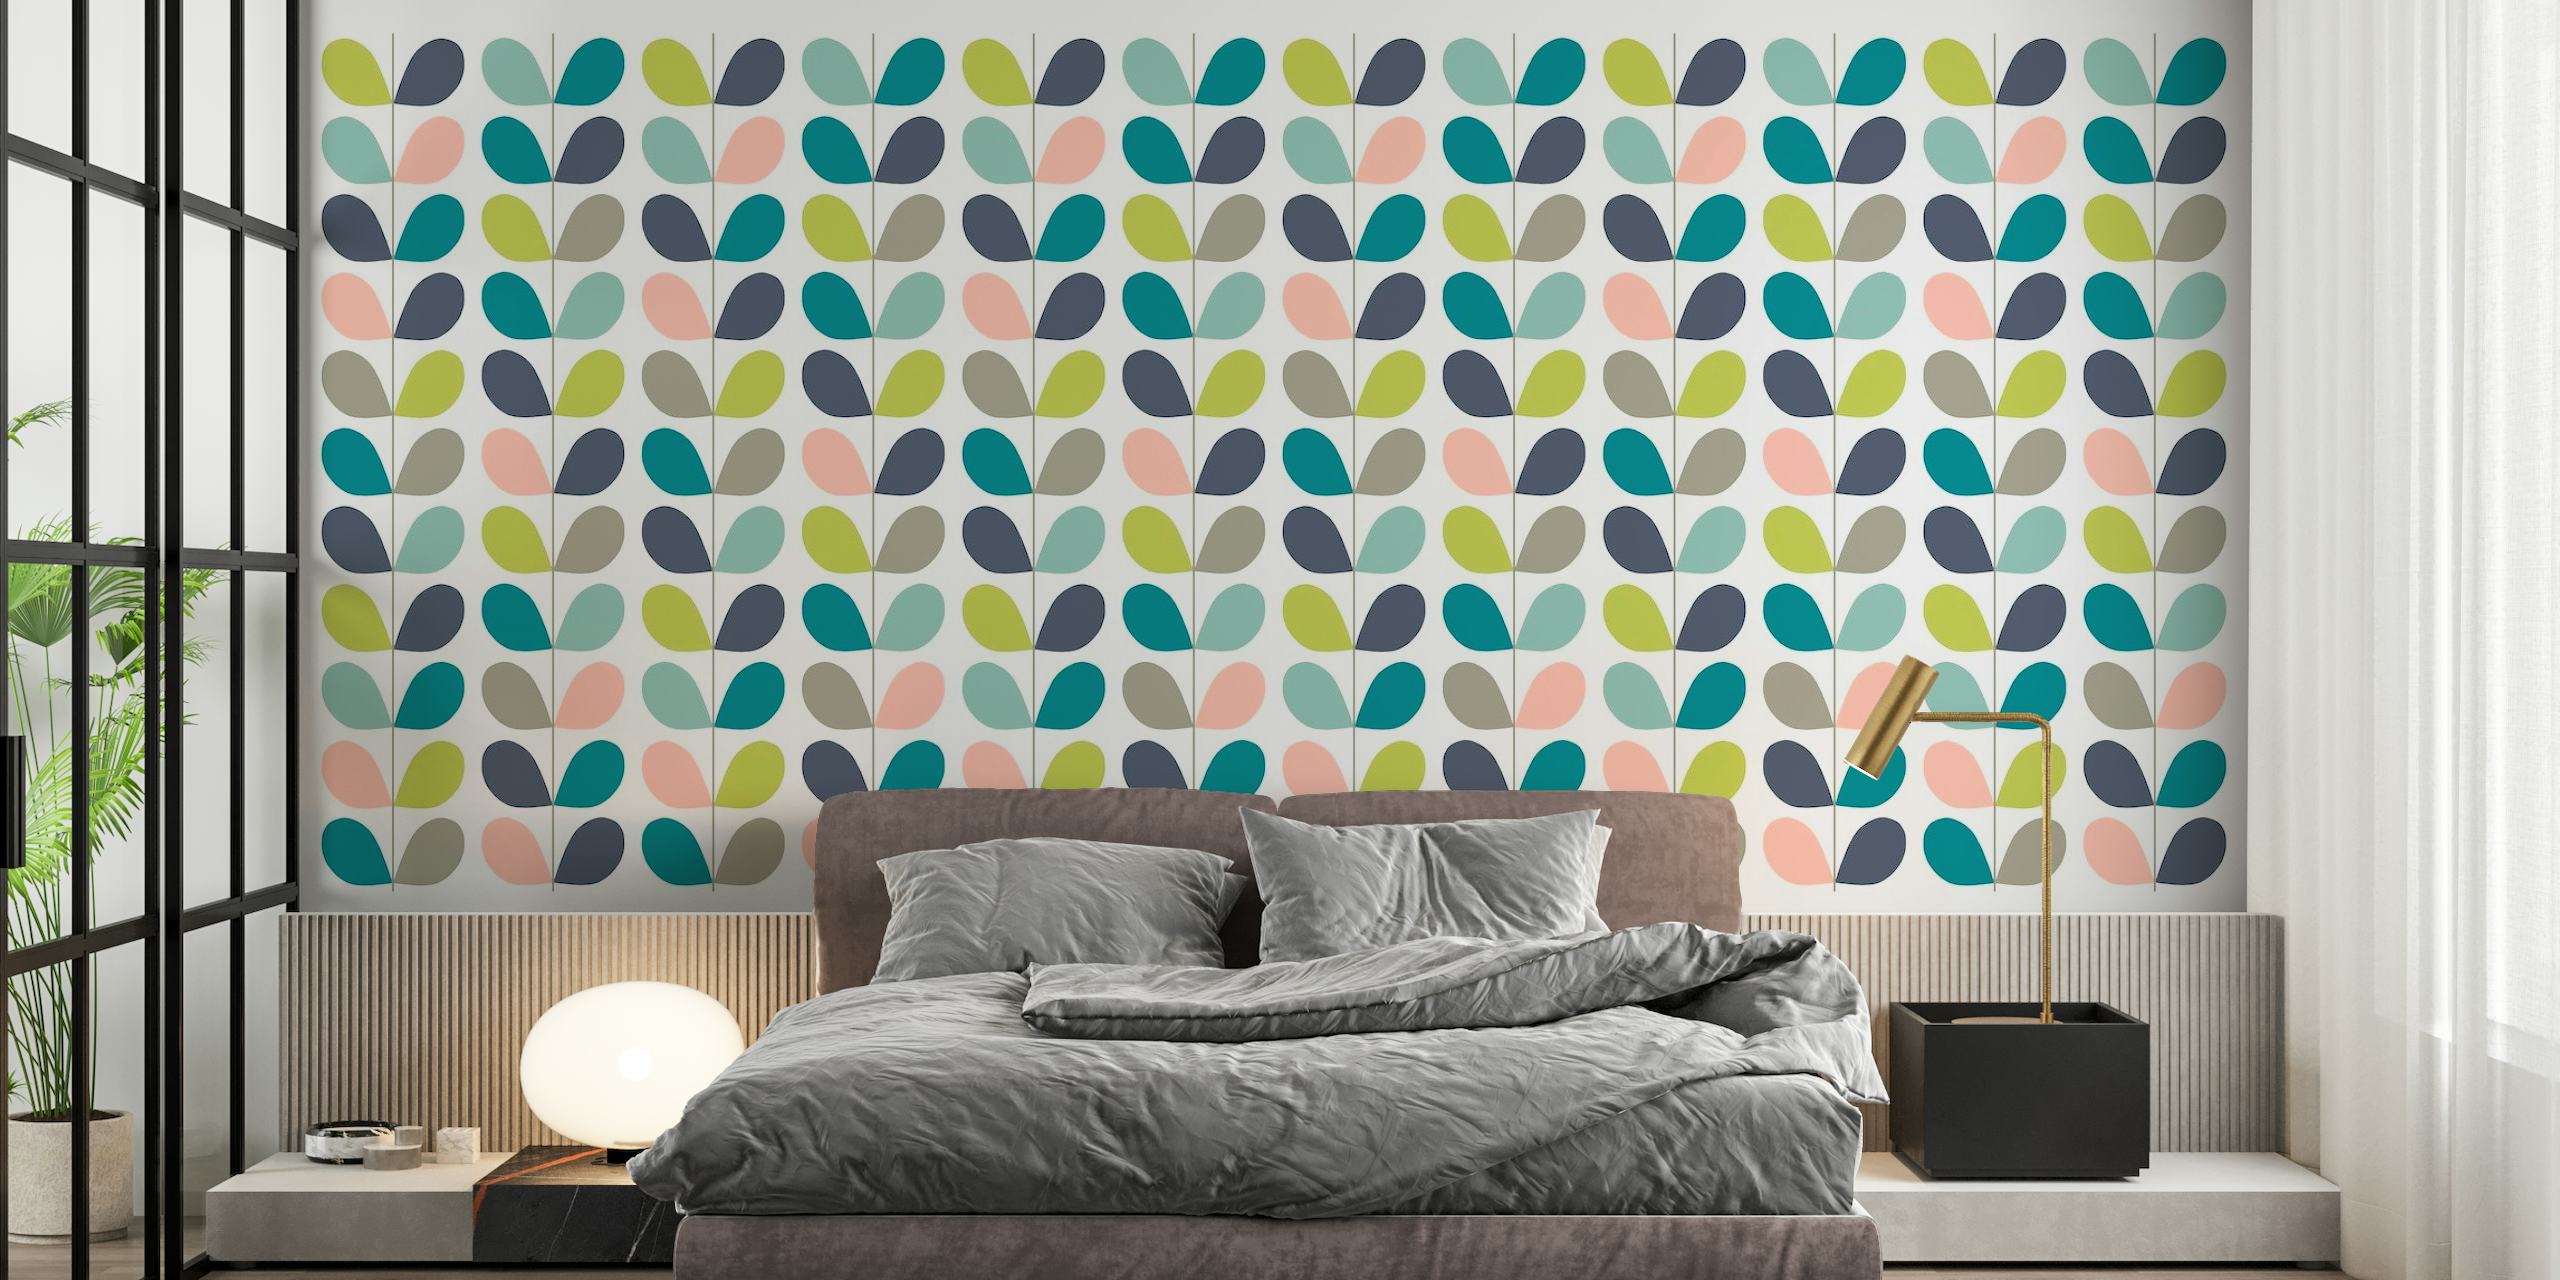 Stylized pastel leaves in a minimalist wall mural pattern